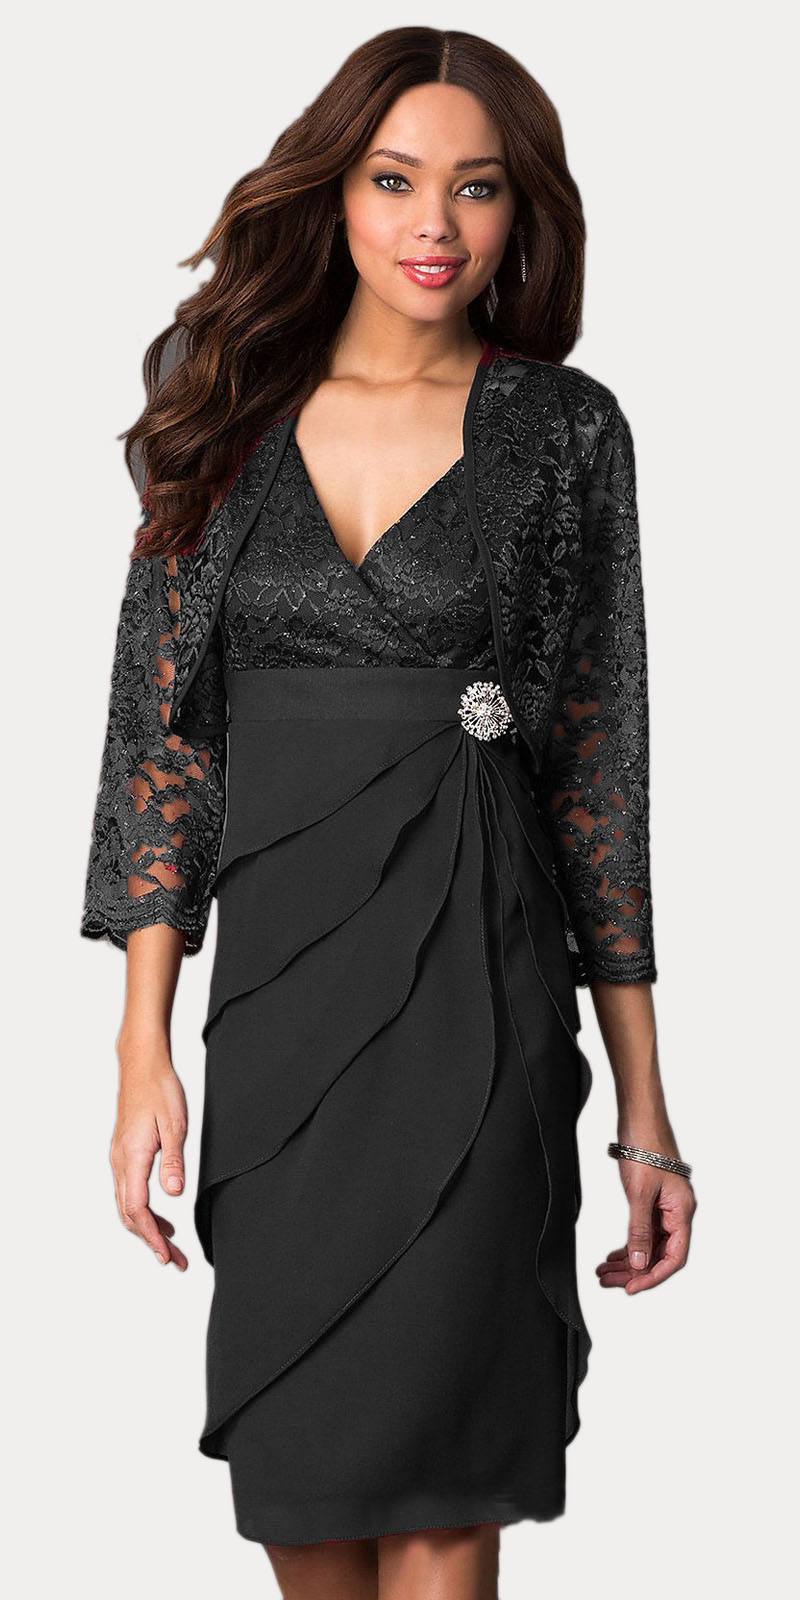 Short Formal Black Dress V-Neck Lace Chiffon 3/4 Sleeve Jacket